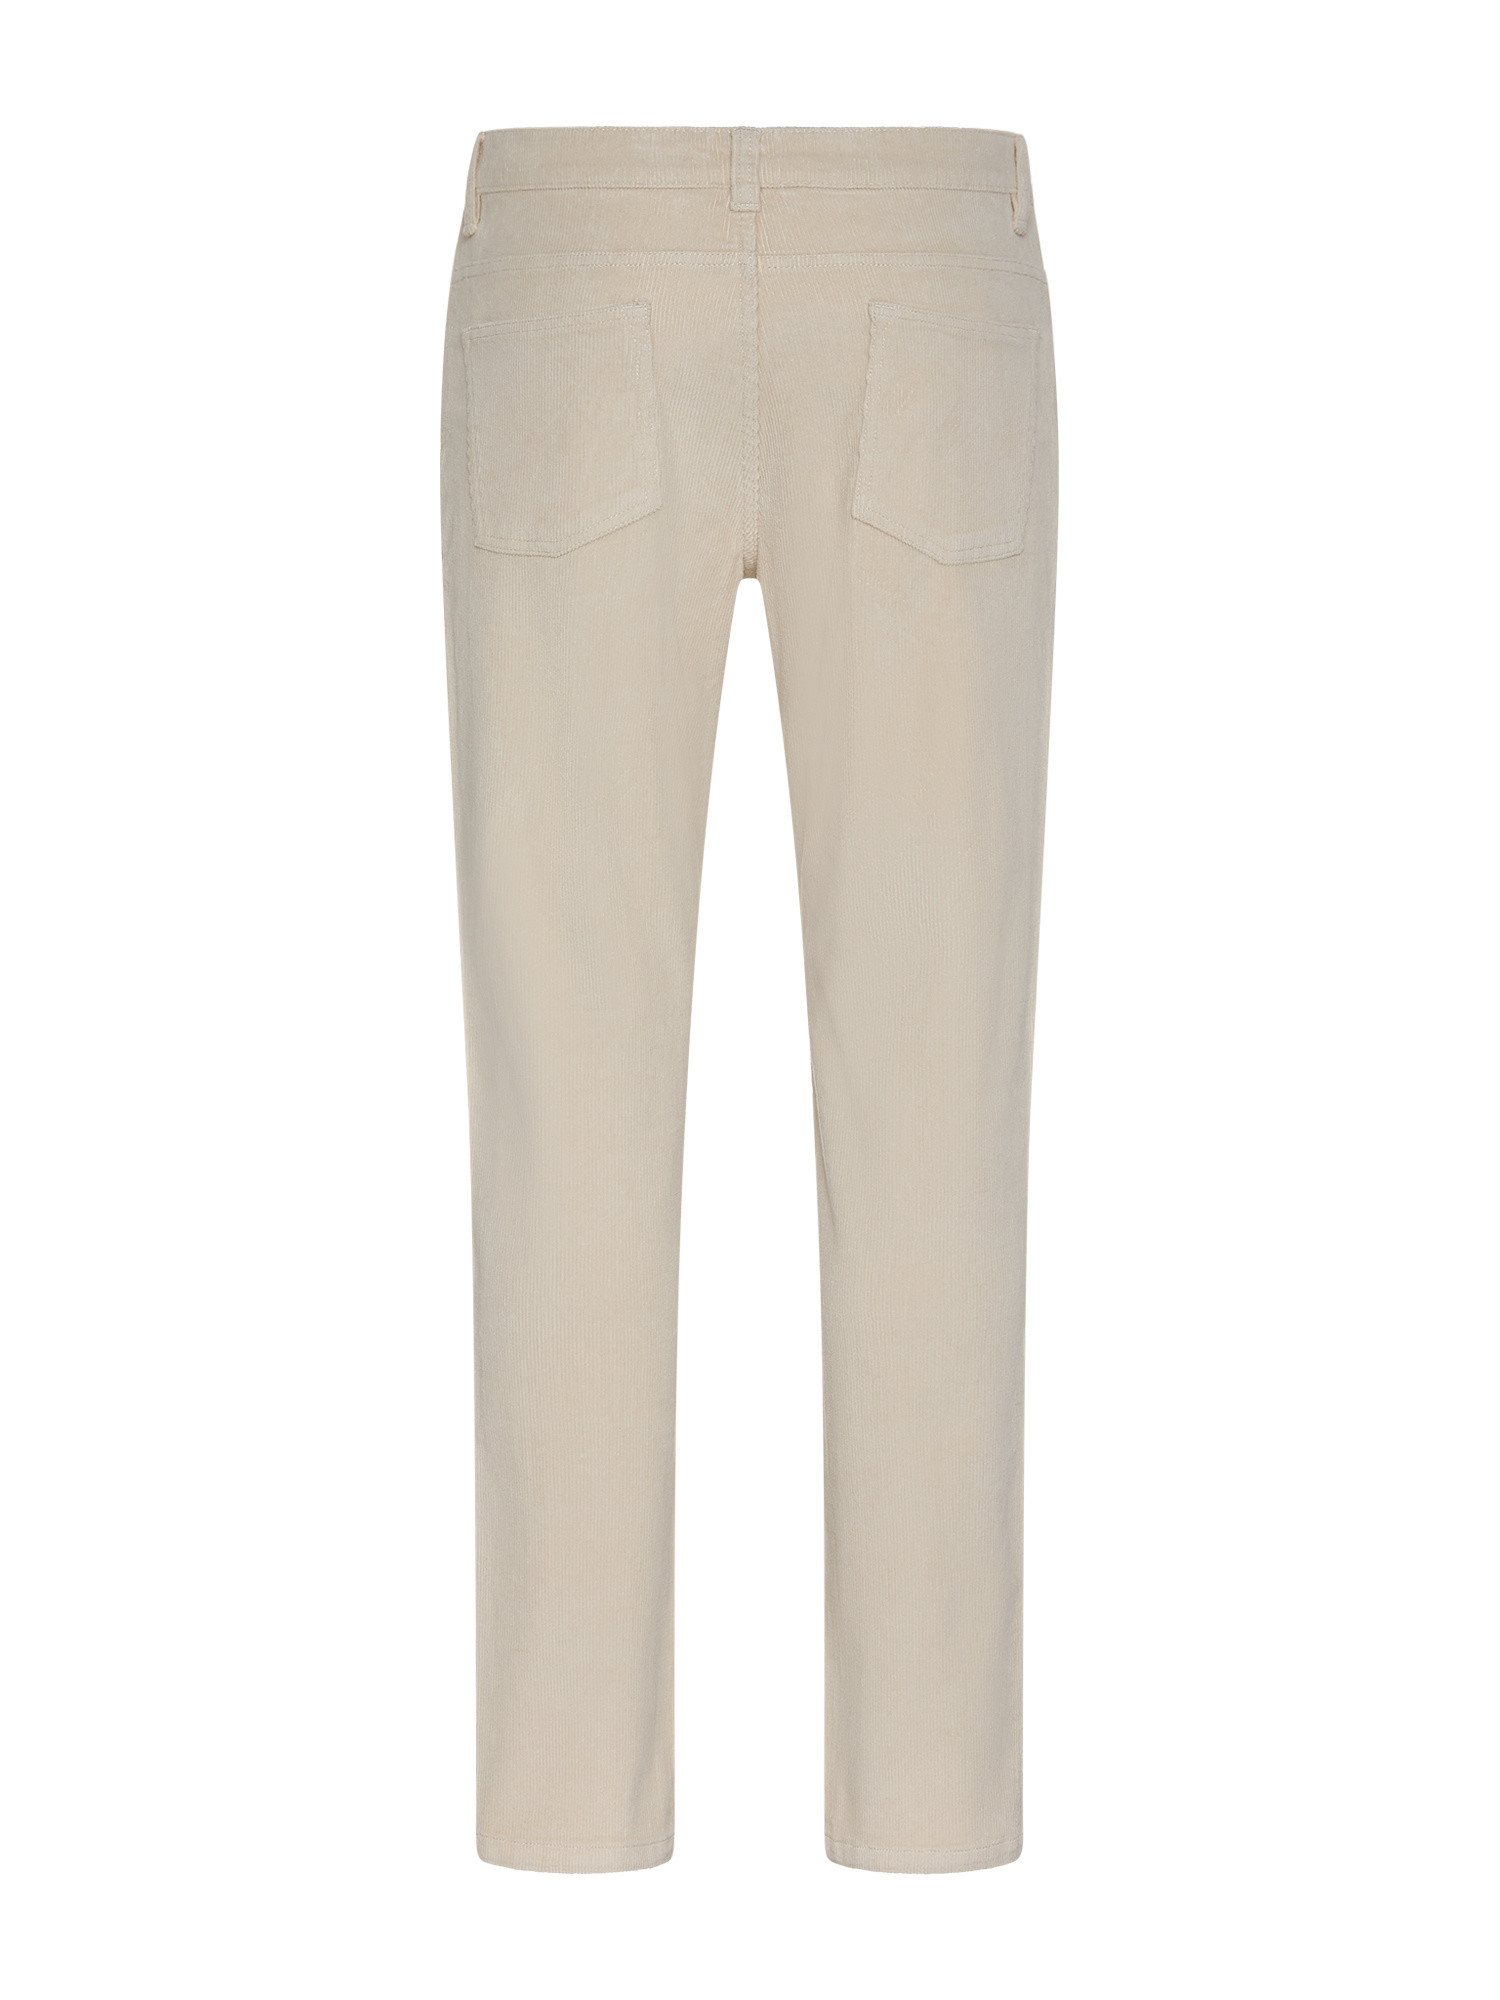 JCT - Pantaloni slim fit in velluto, Bianco panna, large image number 1